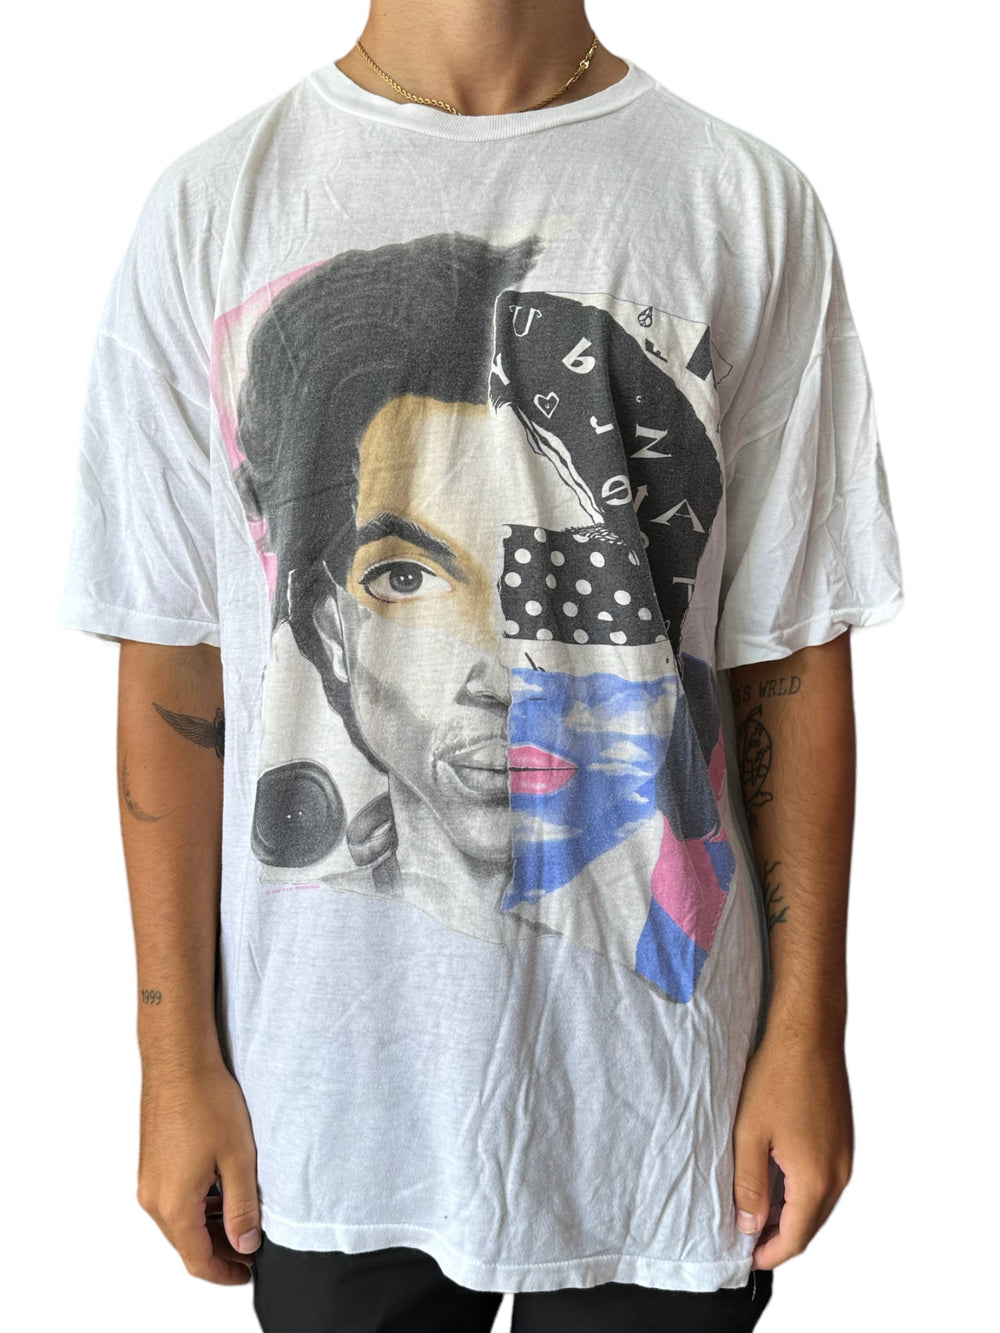 Prince – Vintage Original Tour Shirt LOVESEXY 1988 Pre - Loved RARE